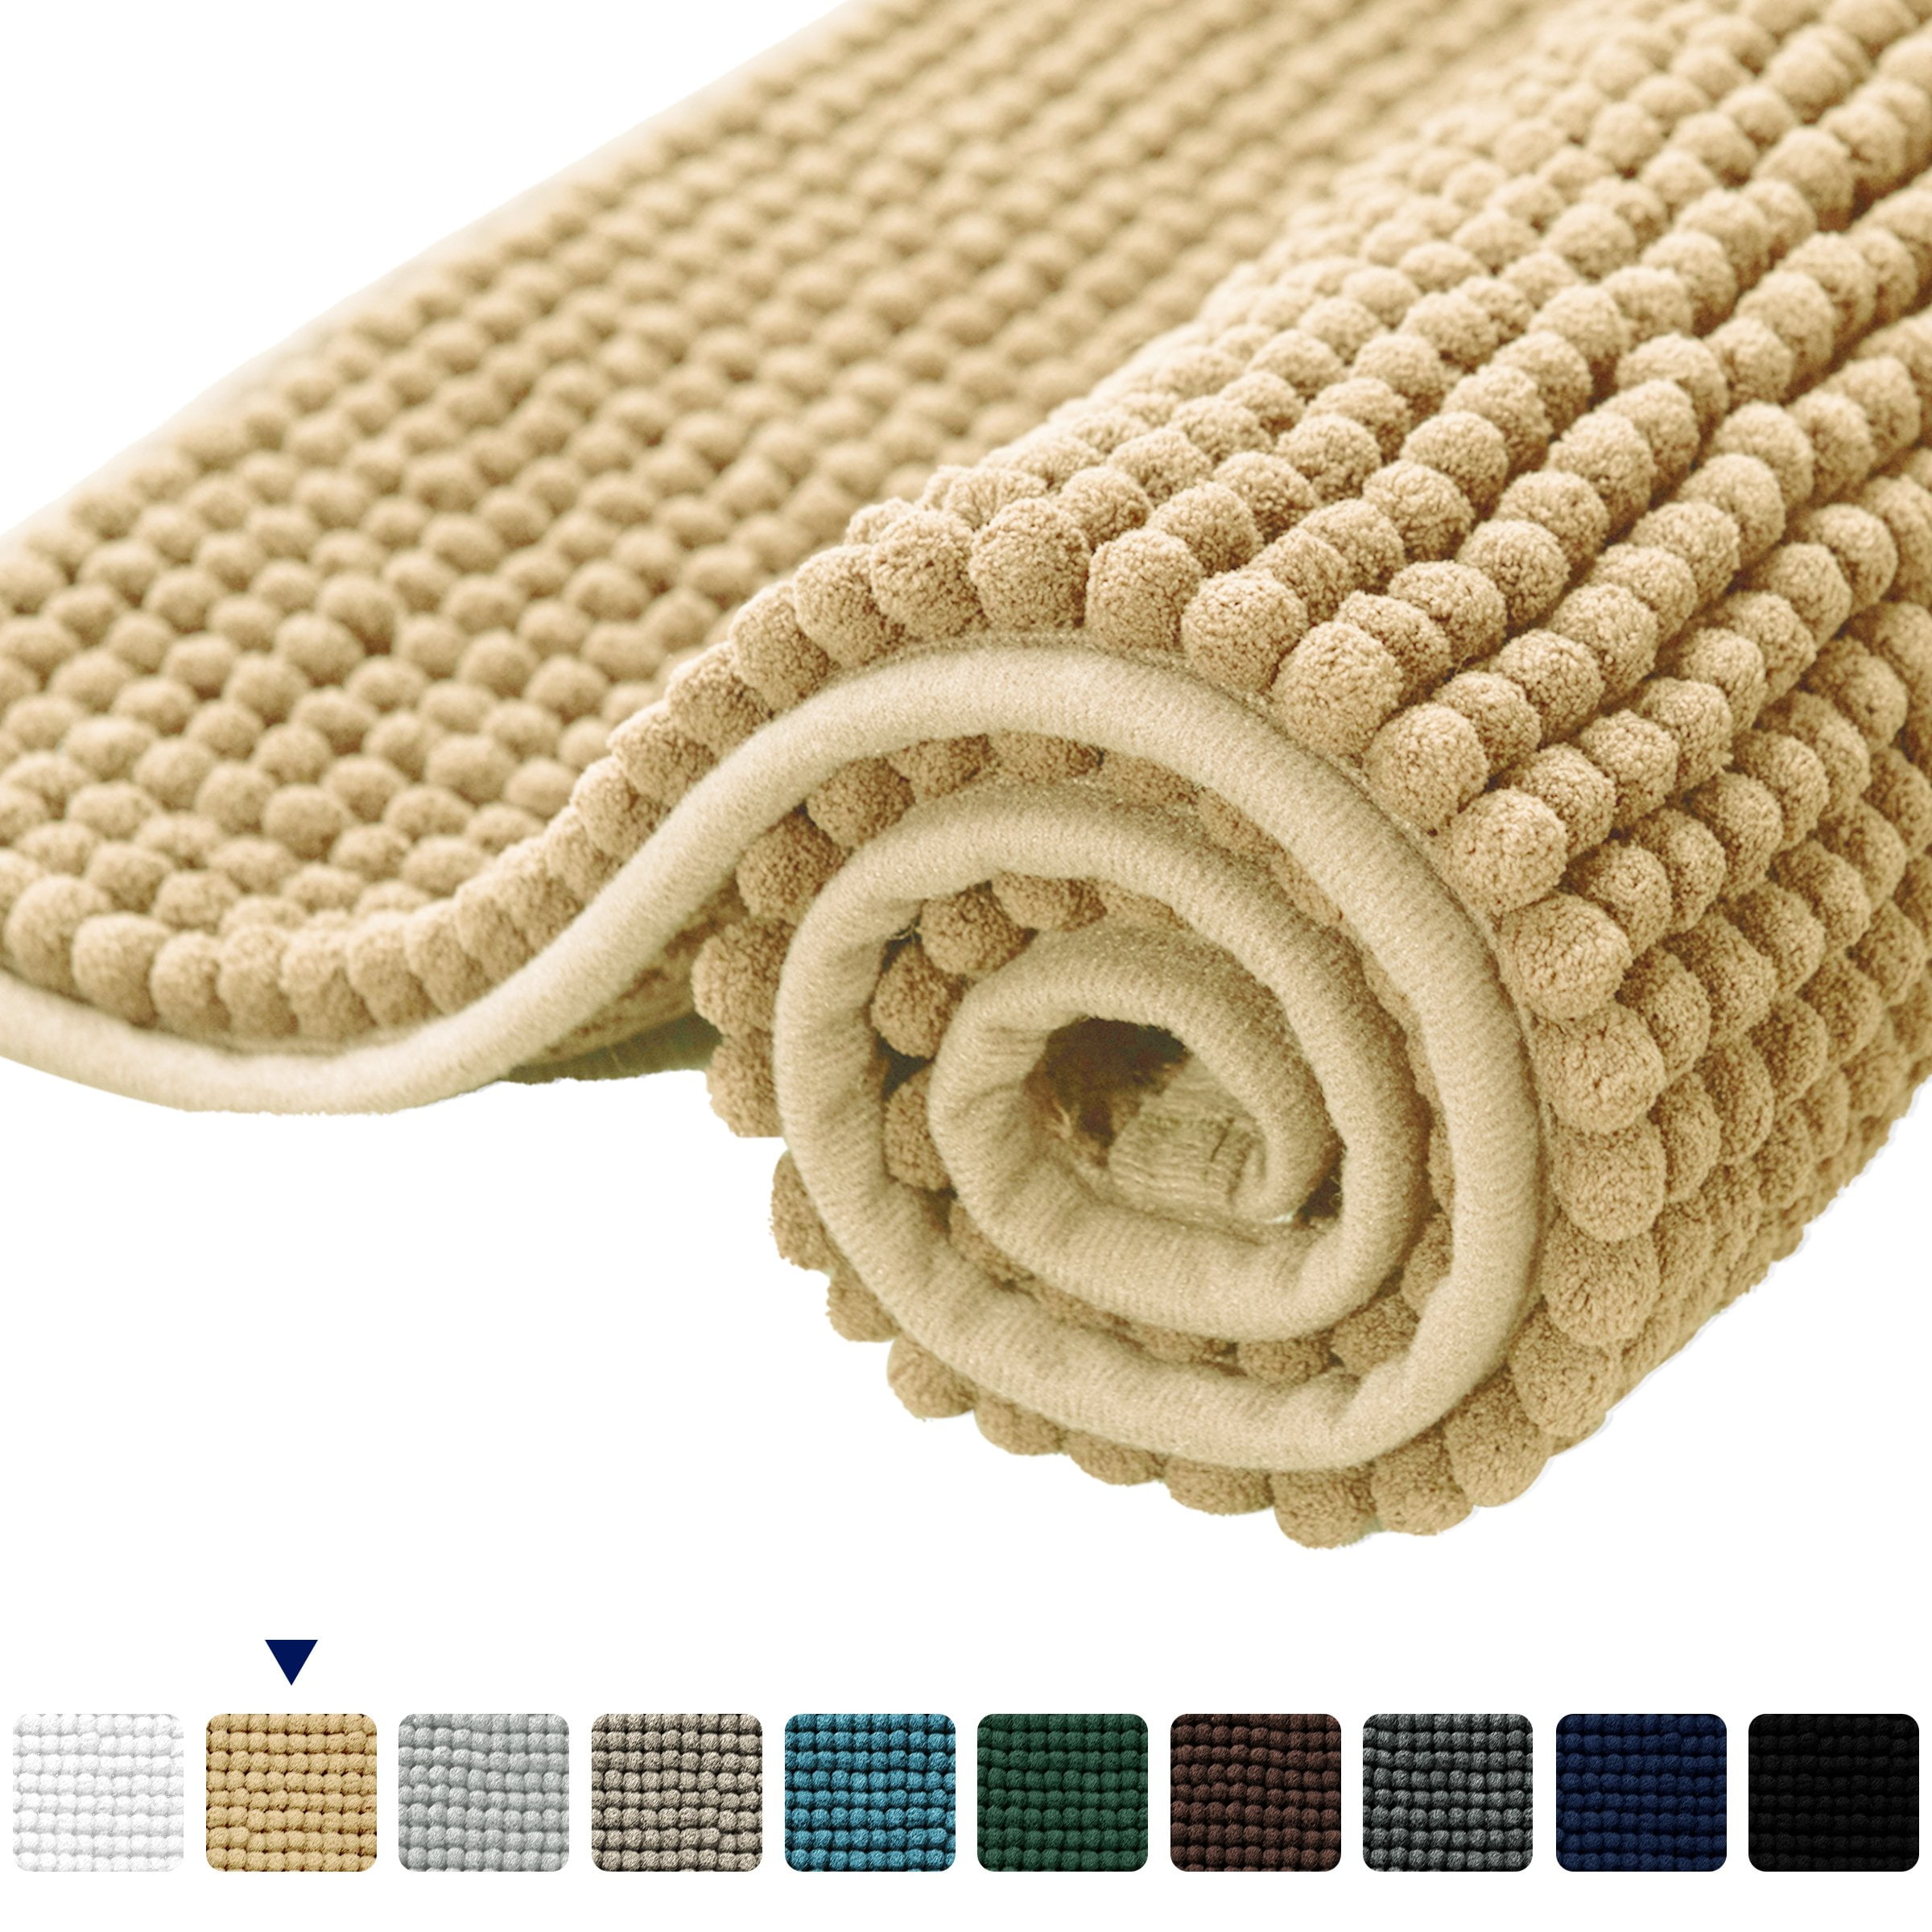 Design Texas State Flag Non-Slip Bathroom Mat Rug Home Decor Door Floor Carpet 